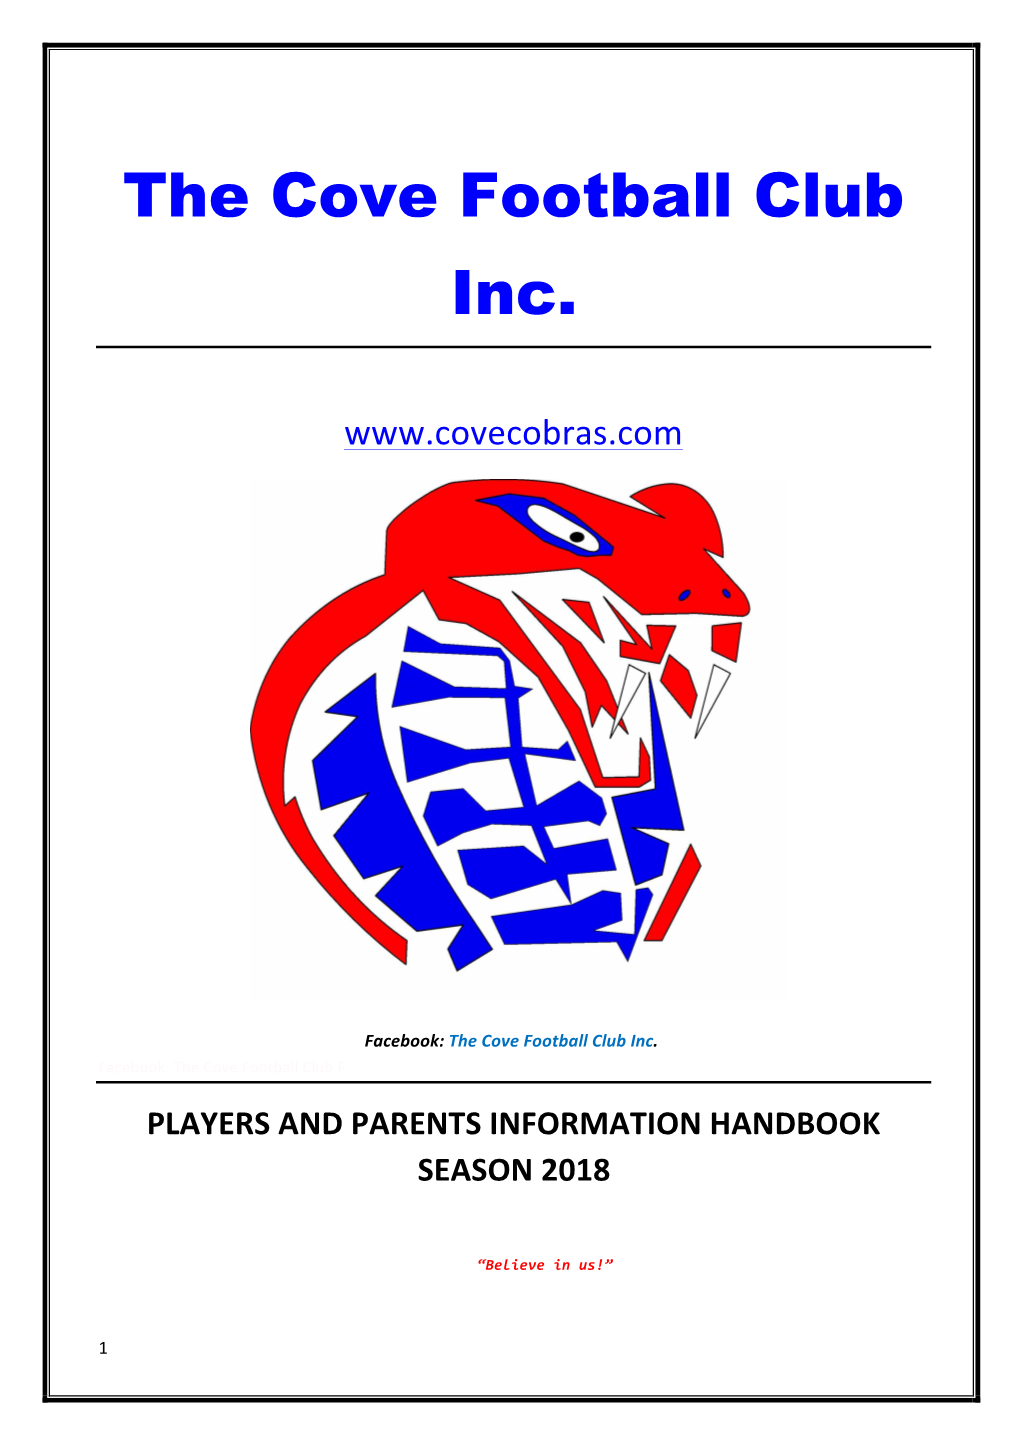 The Cove Football Club Inc